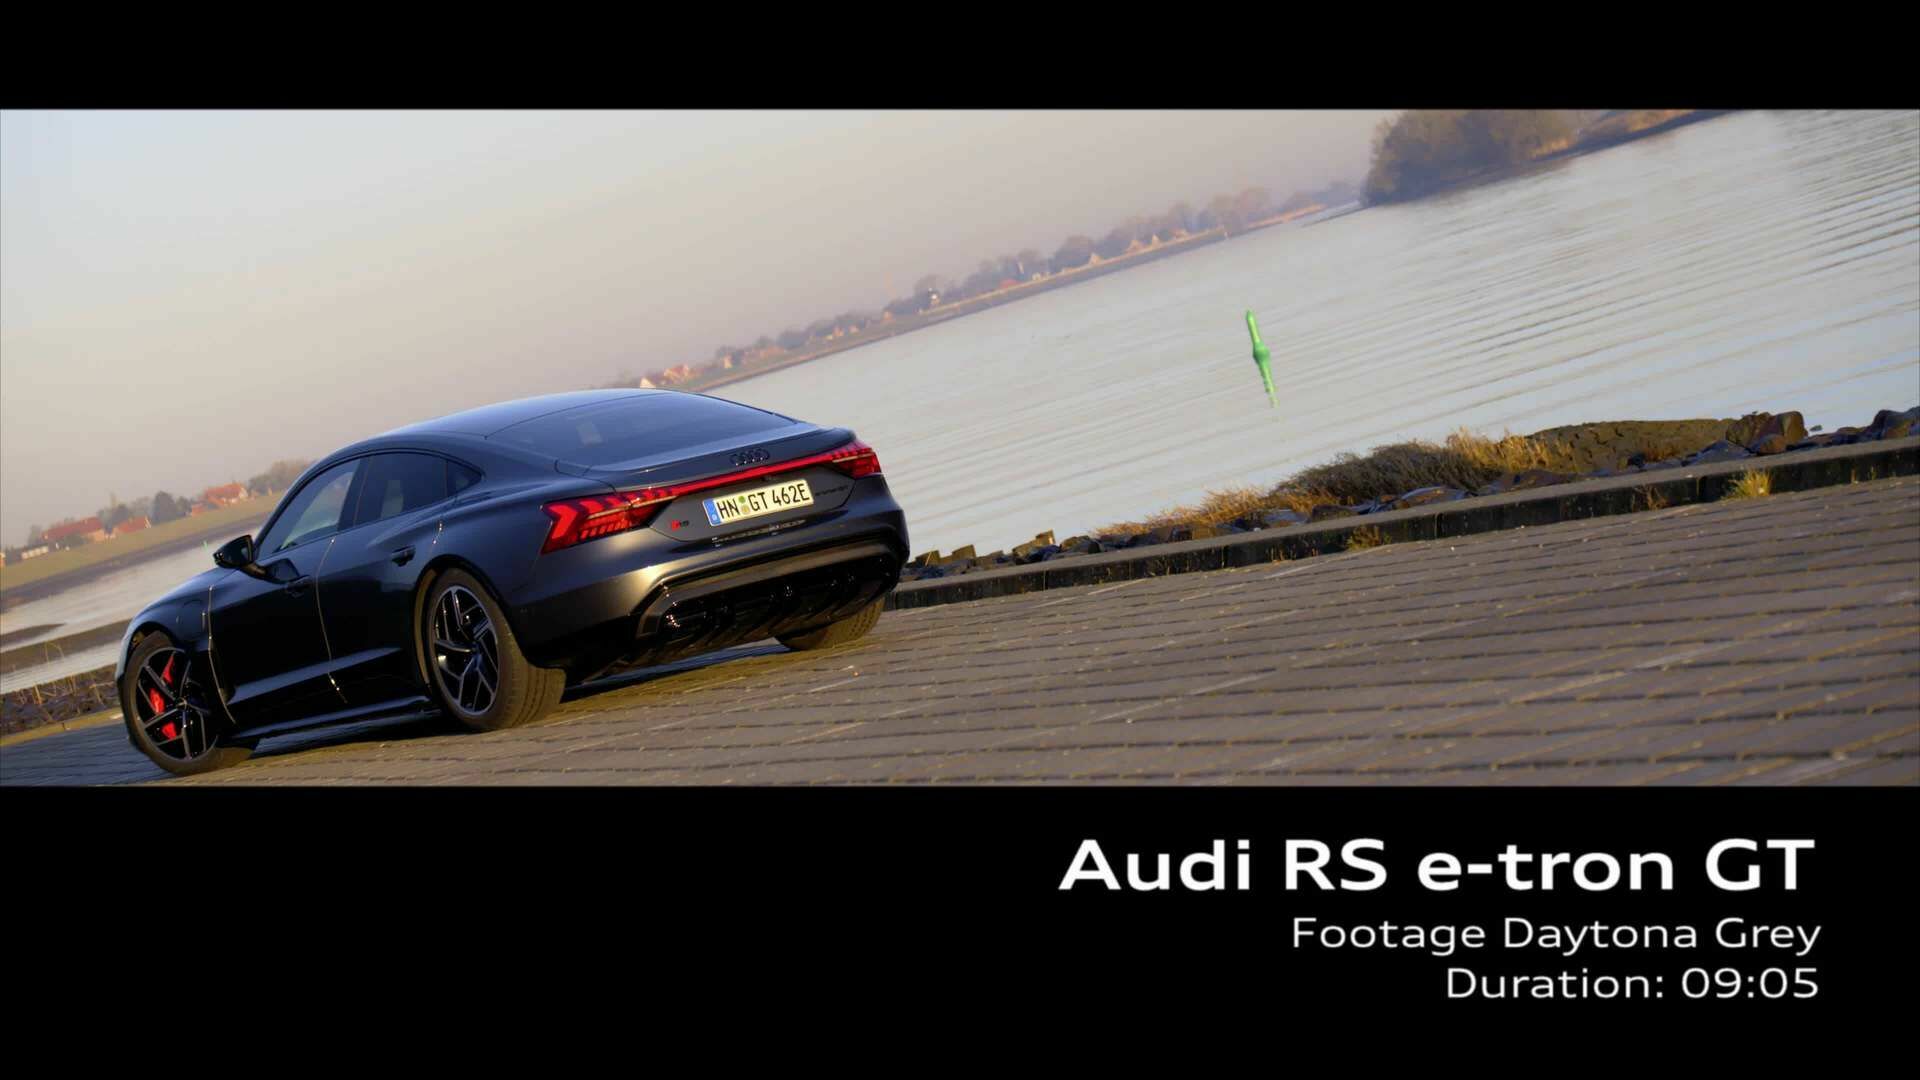 Footage: Audi RS e-tron GT Daytona Grey